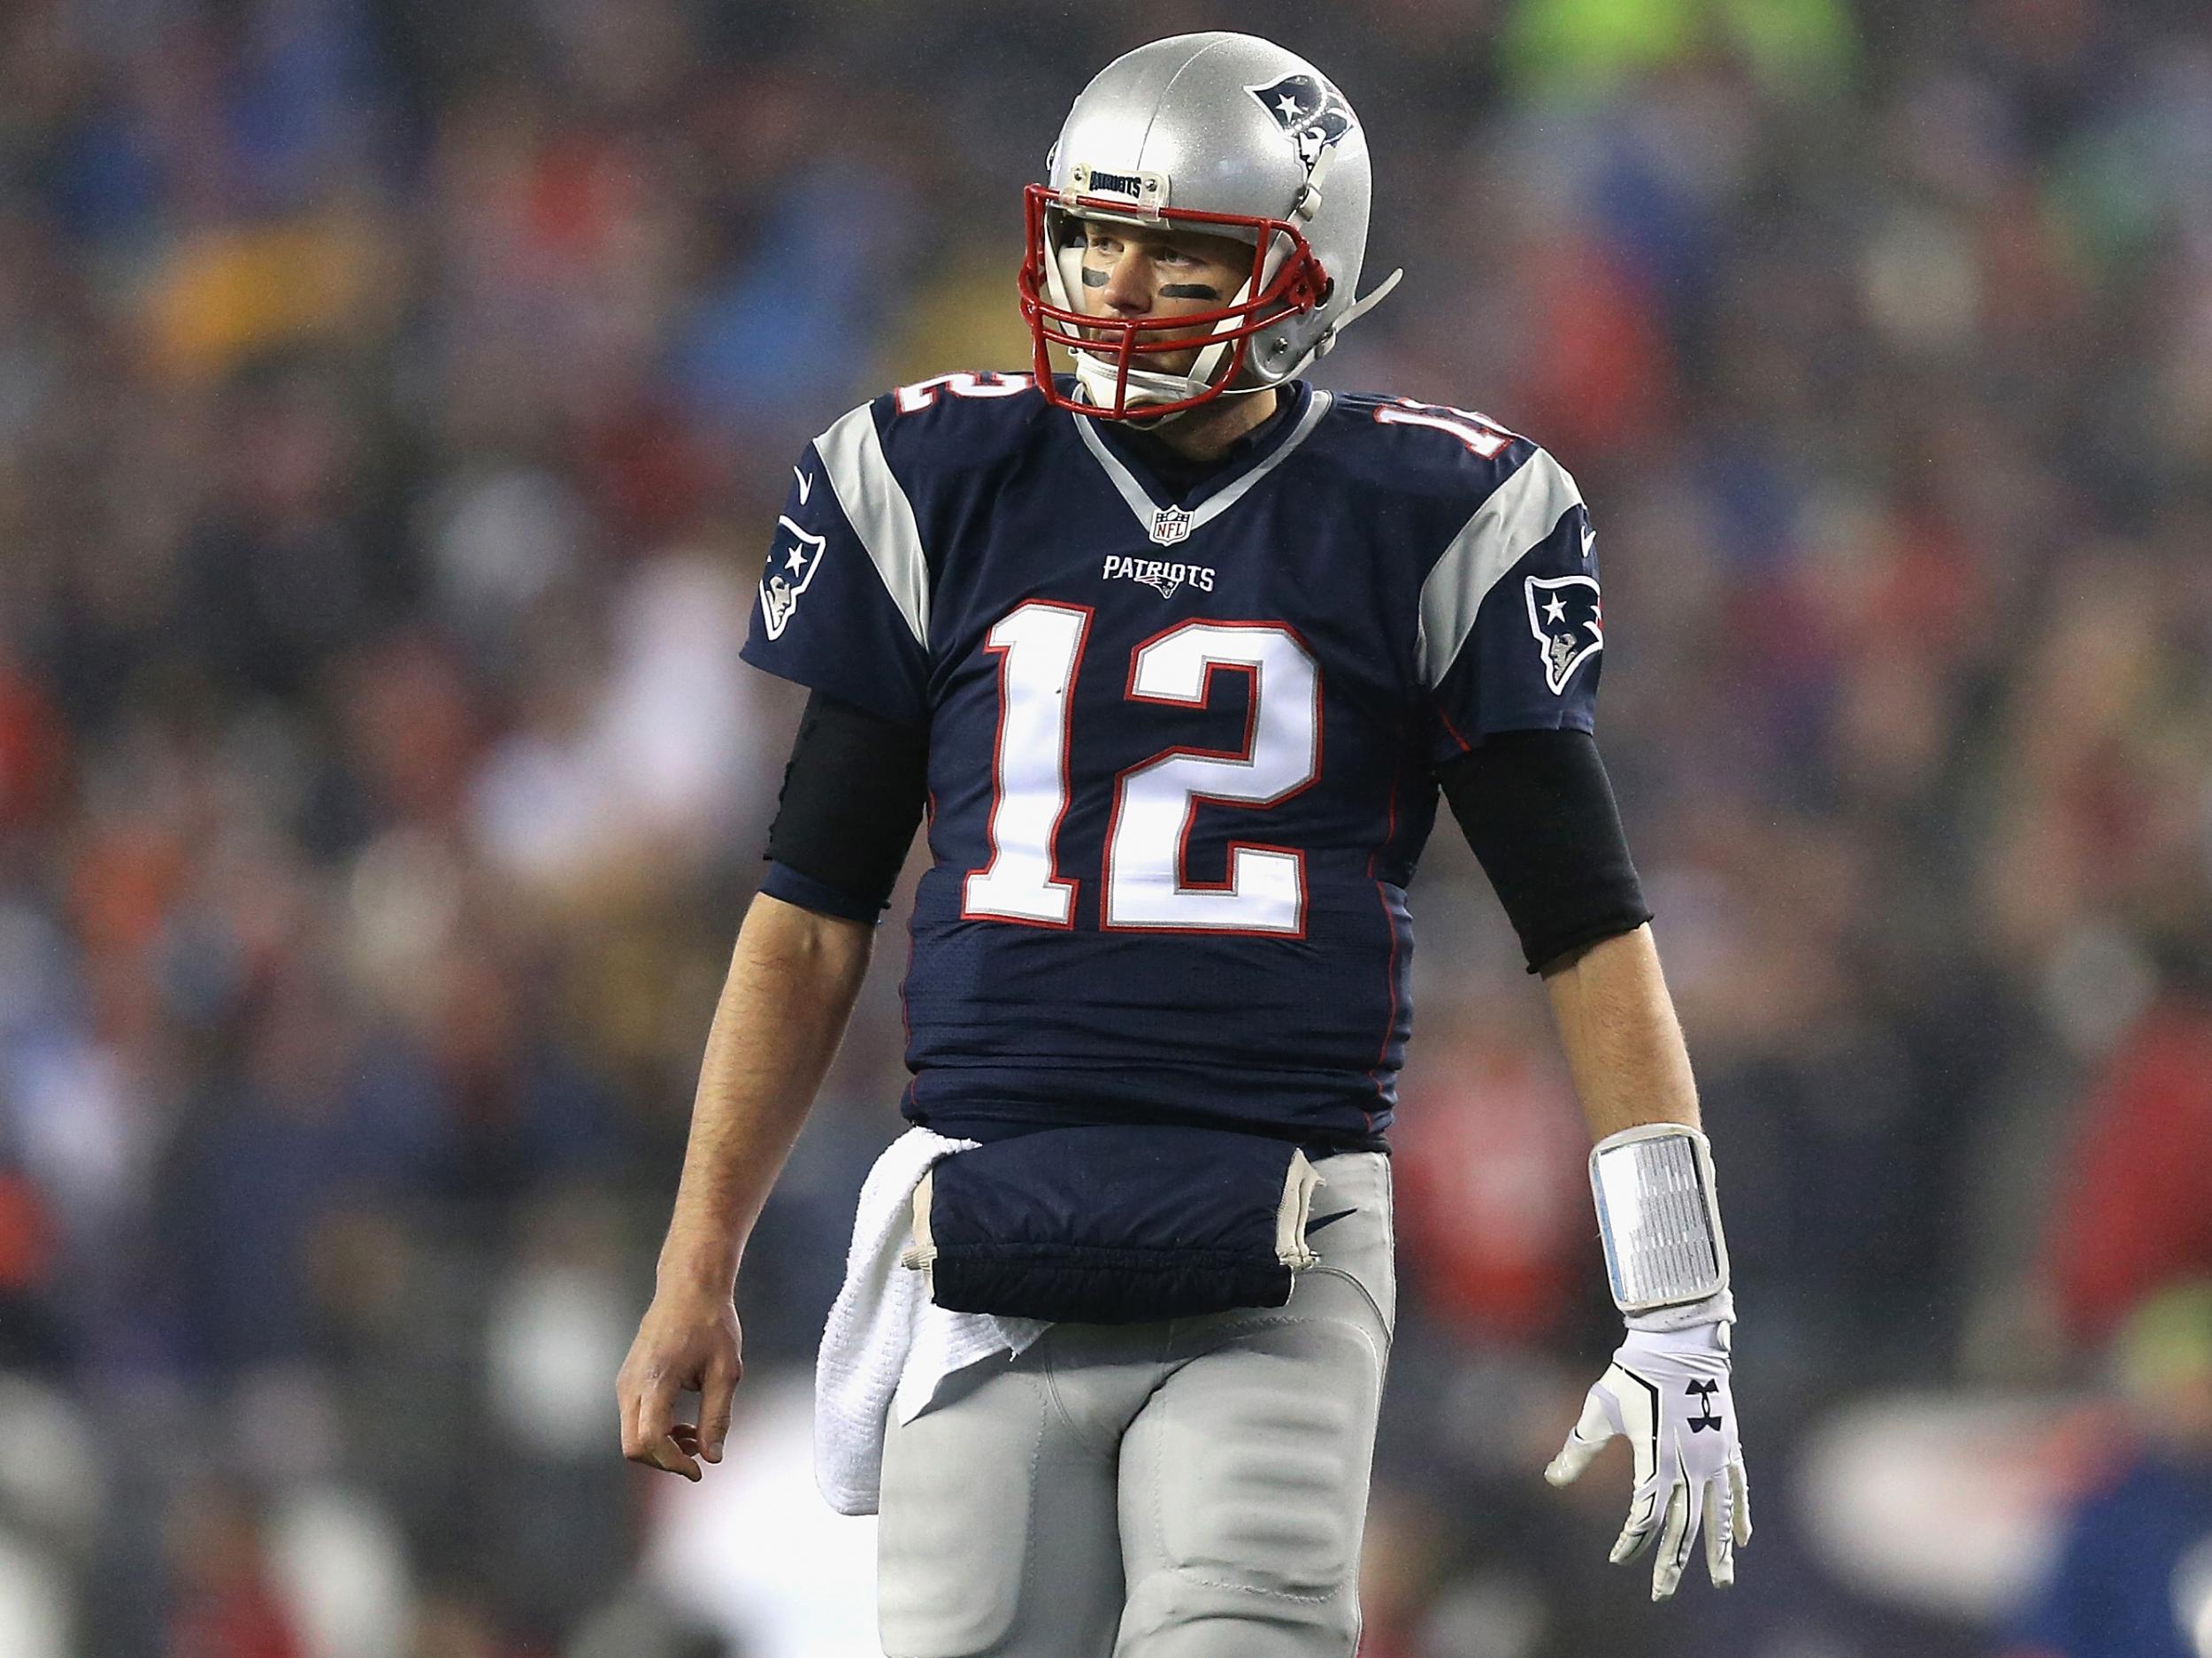 Brady has had one of his best-ever seasons